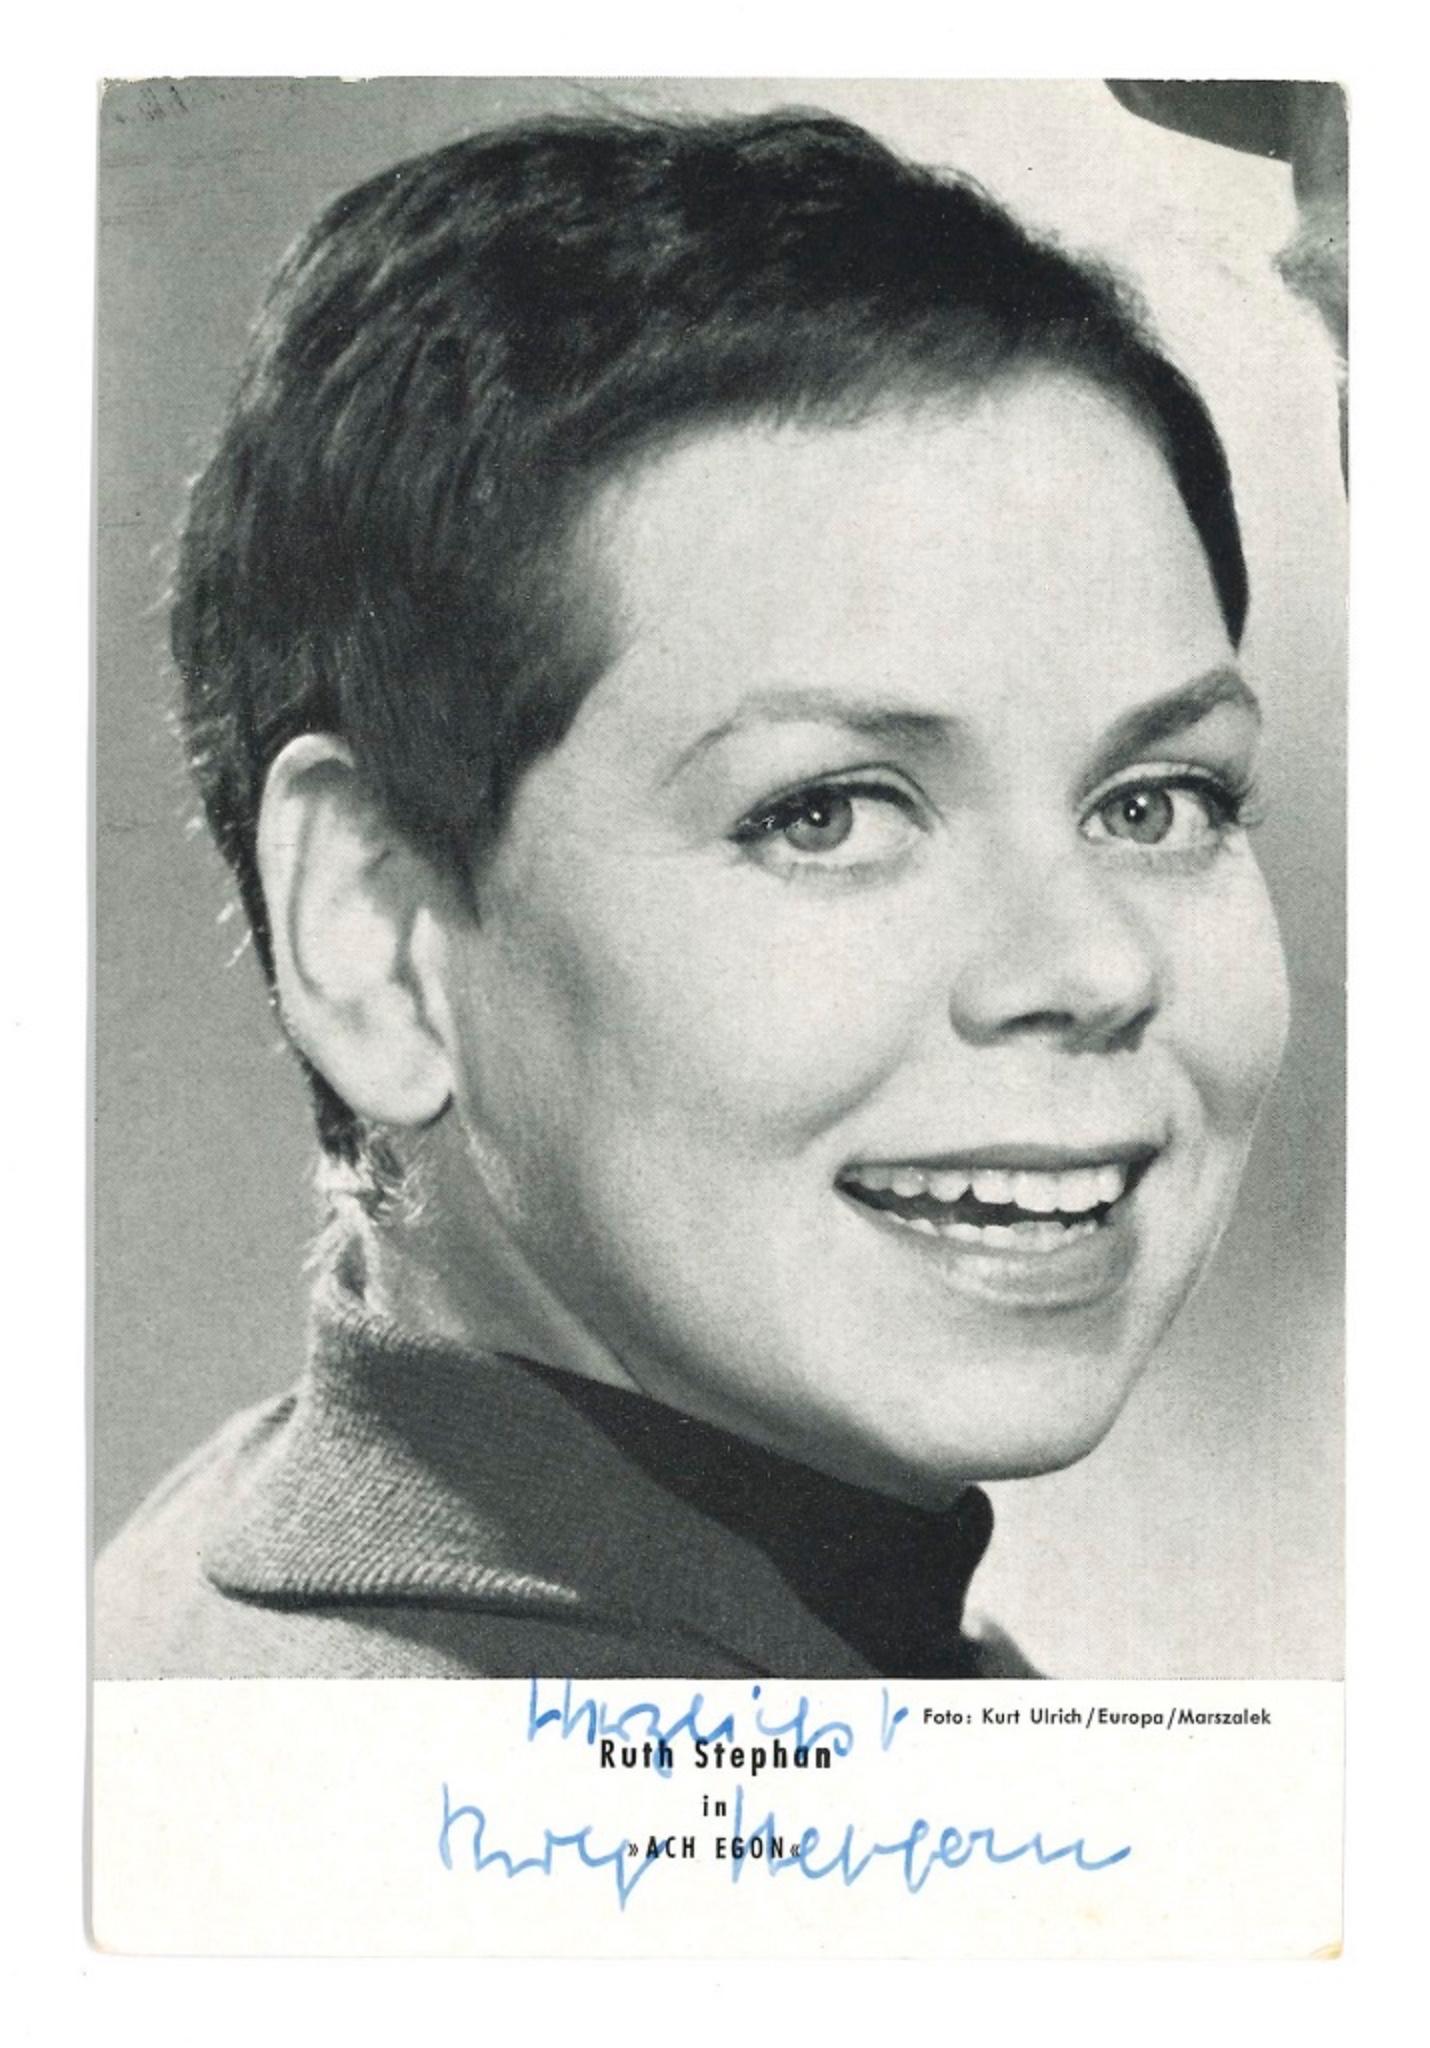 Unknown Portrait Photograph - Autograph by Ruth Stephan - Vintage b/w Postcard - 1960s